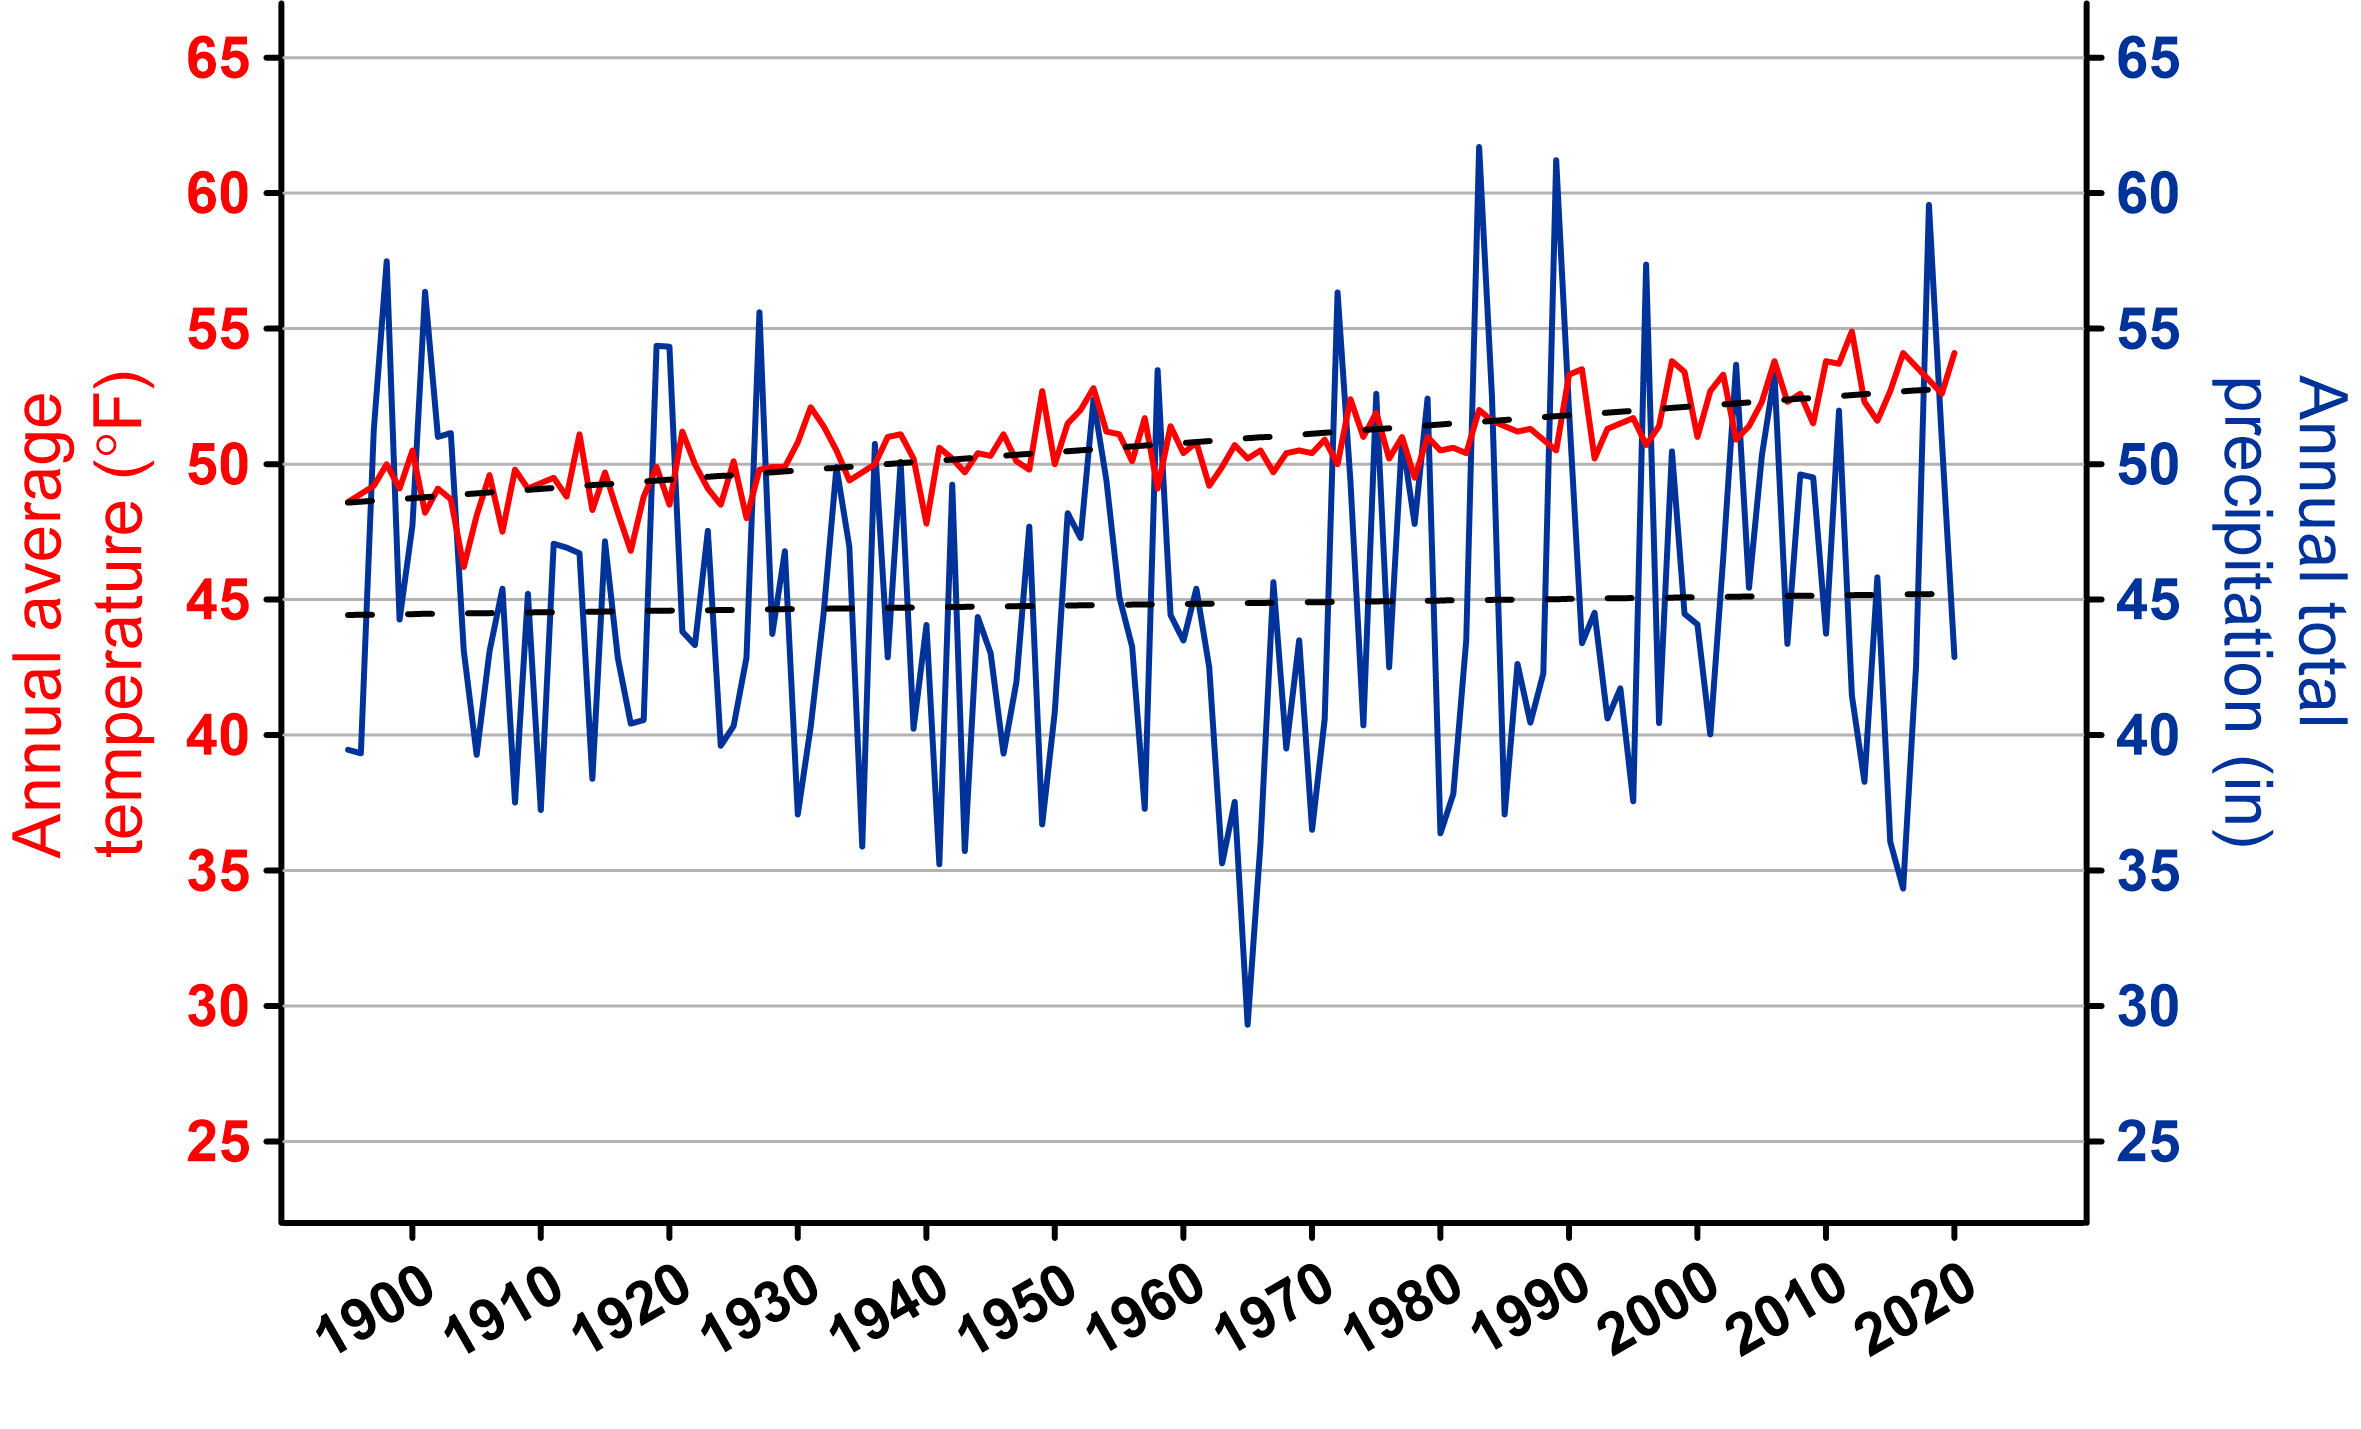 line graph on precipitation and temperature trends for FIIS in 2020